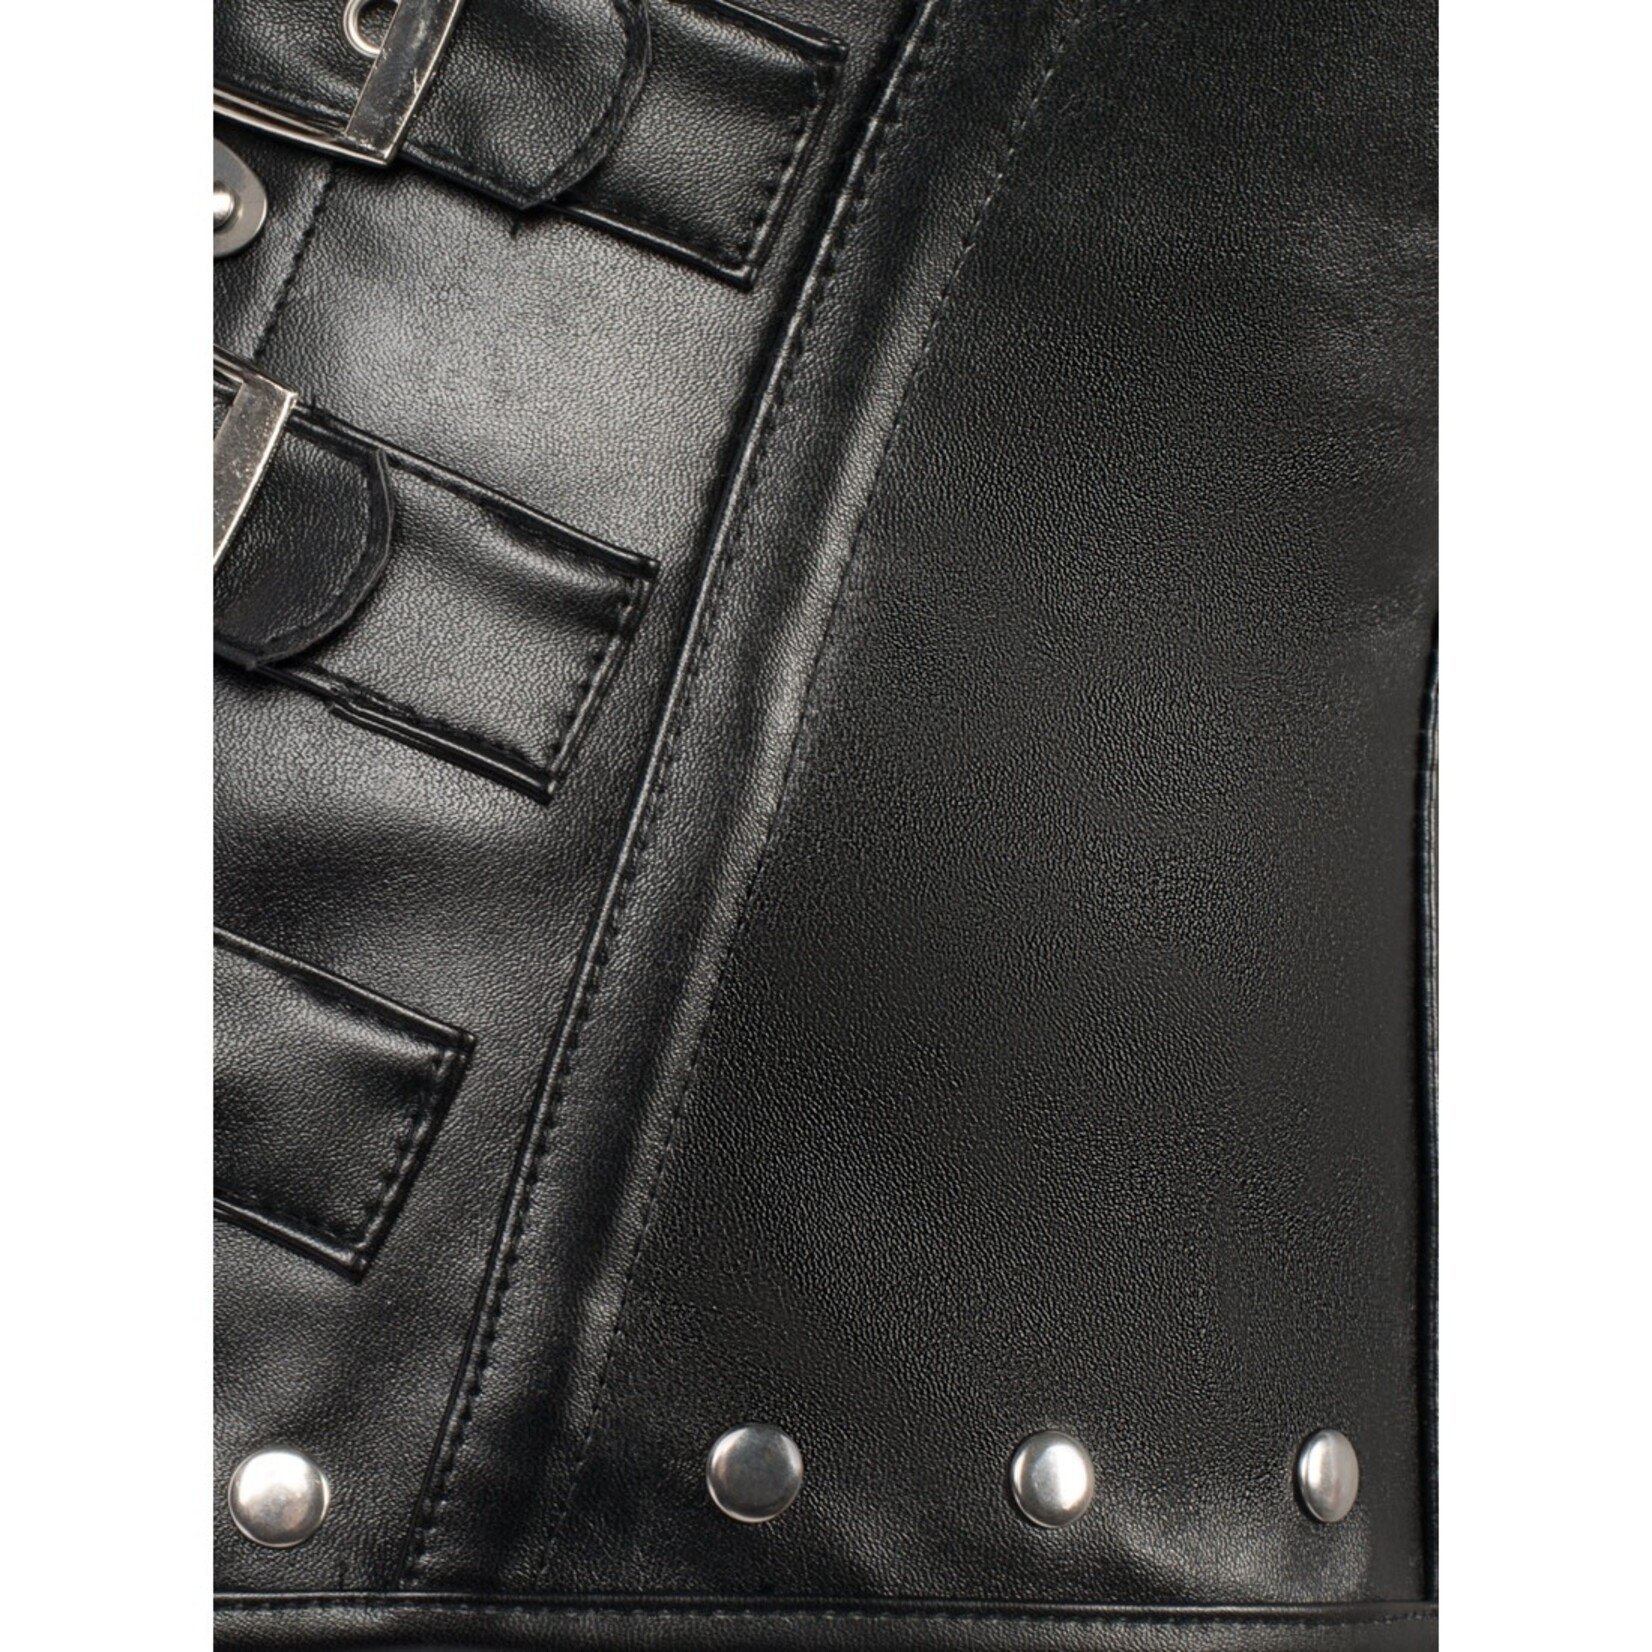 Corset Story Black Leather Look PU Underbust w/ Halter US12